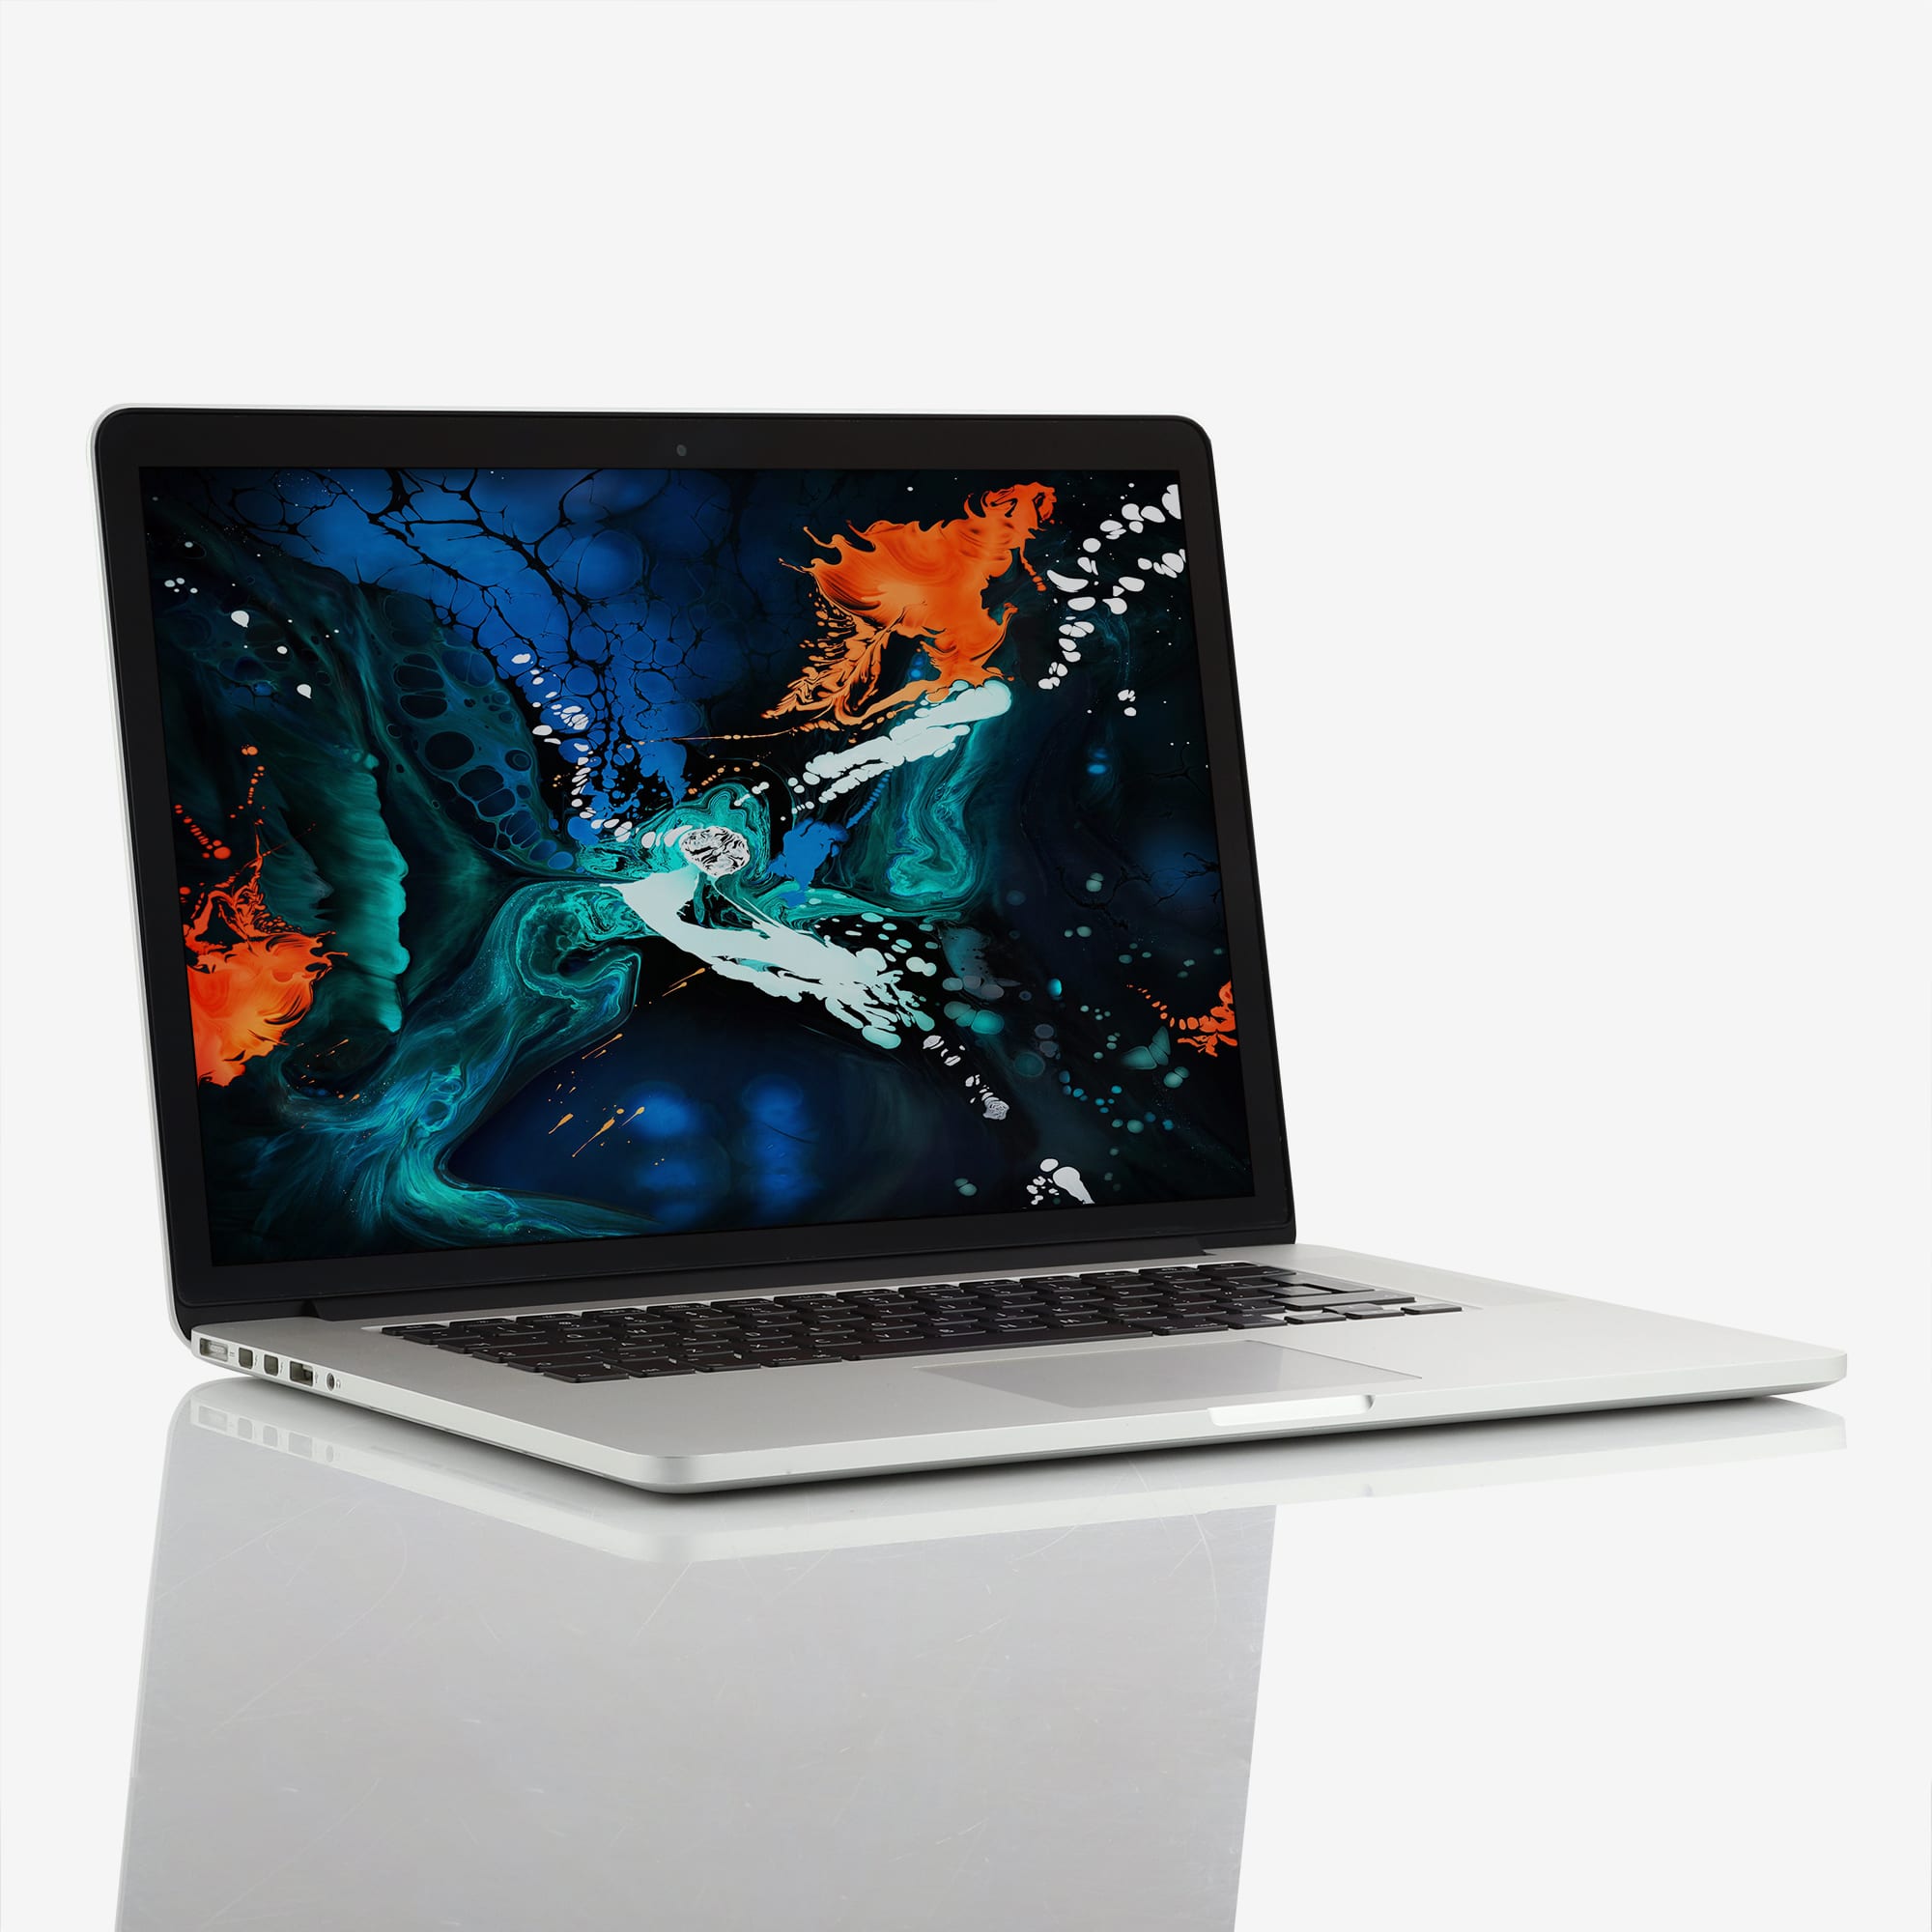 1 x Apple MacBook Pro Retina 15 Inch Intel Core i7 2.20 GHz (2015)